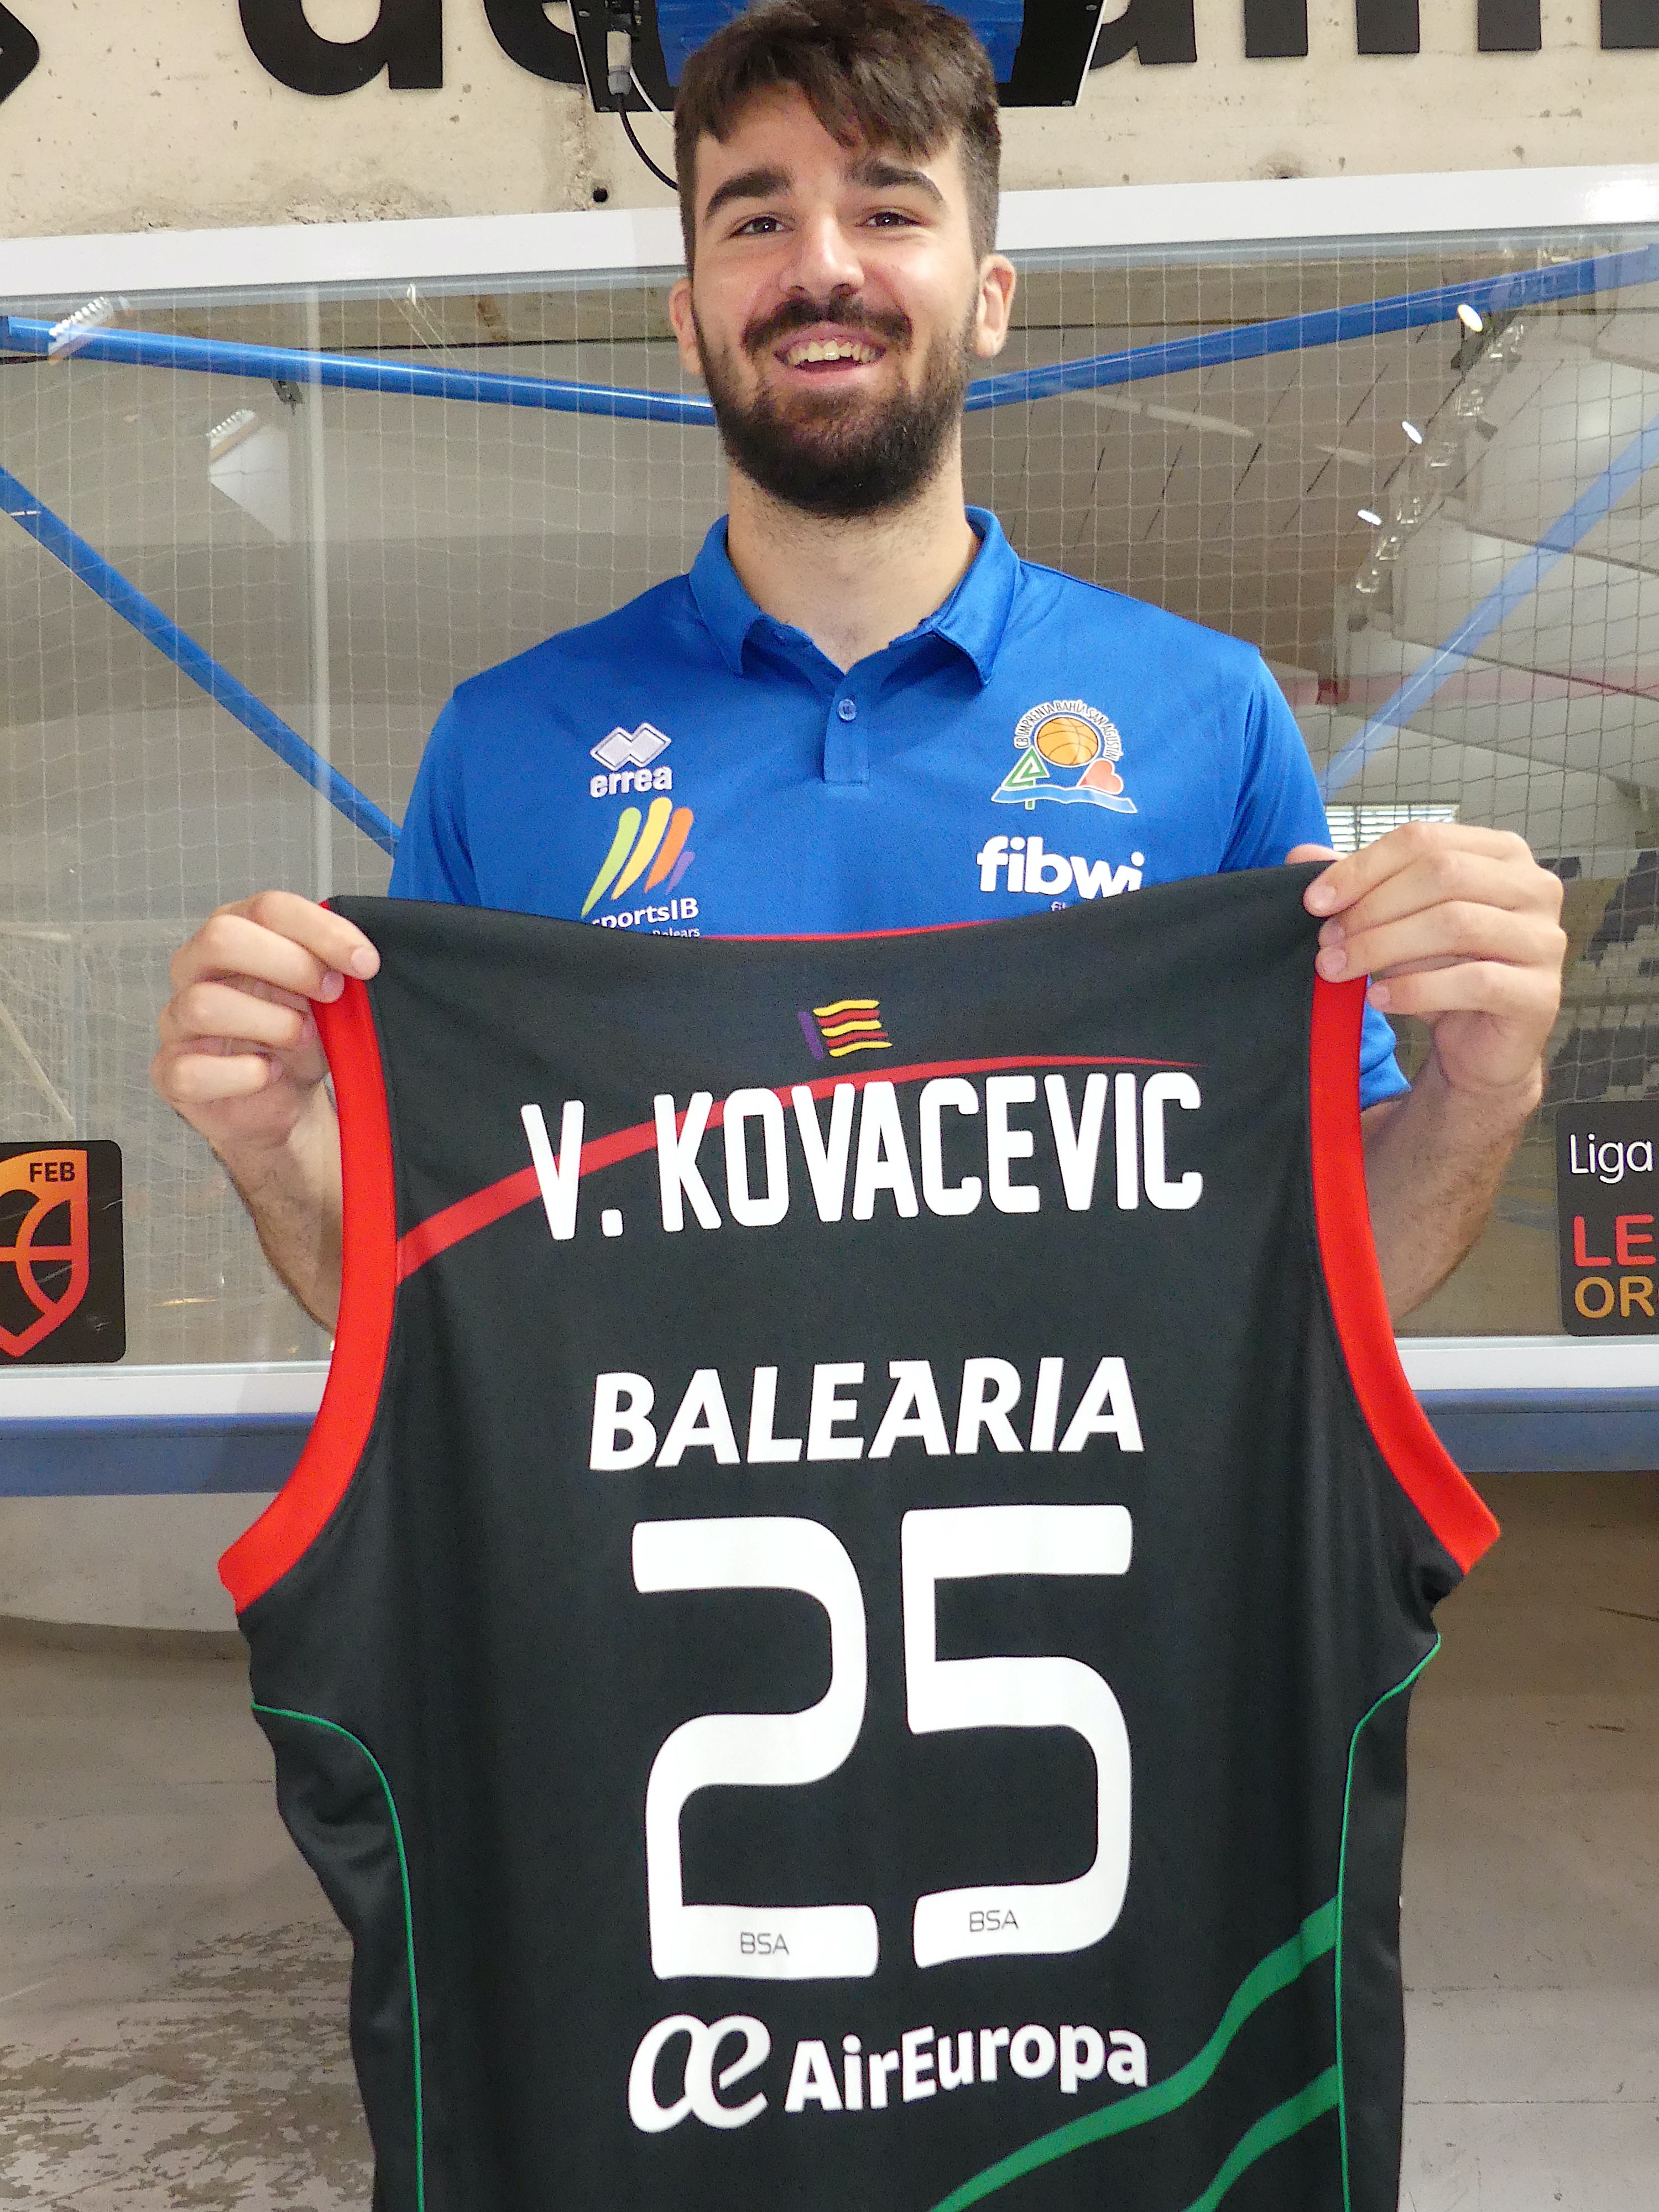 Viktor Kovacevic